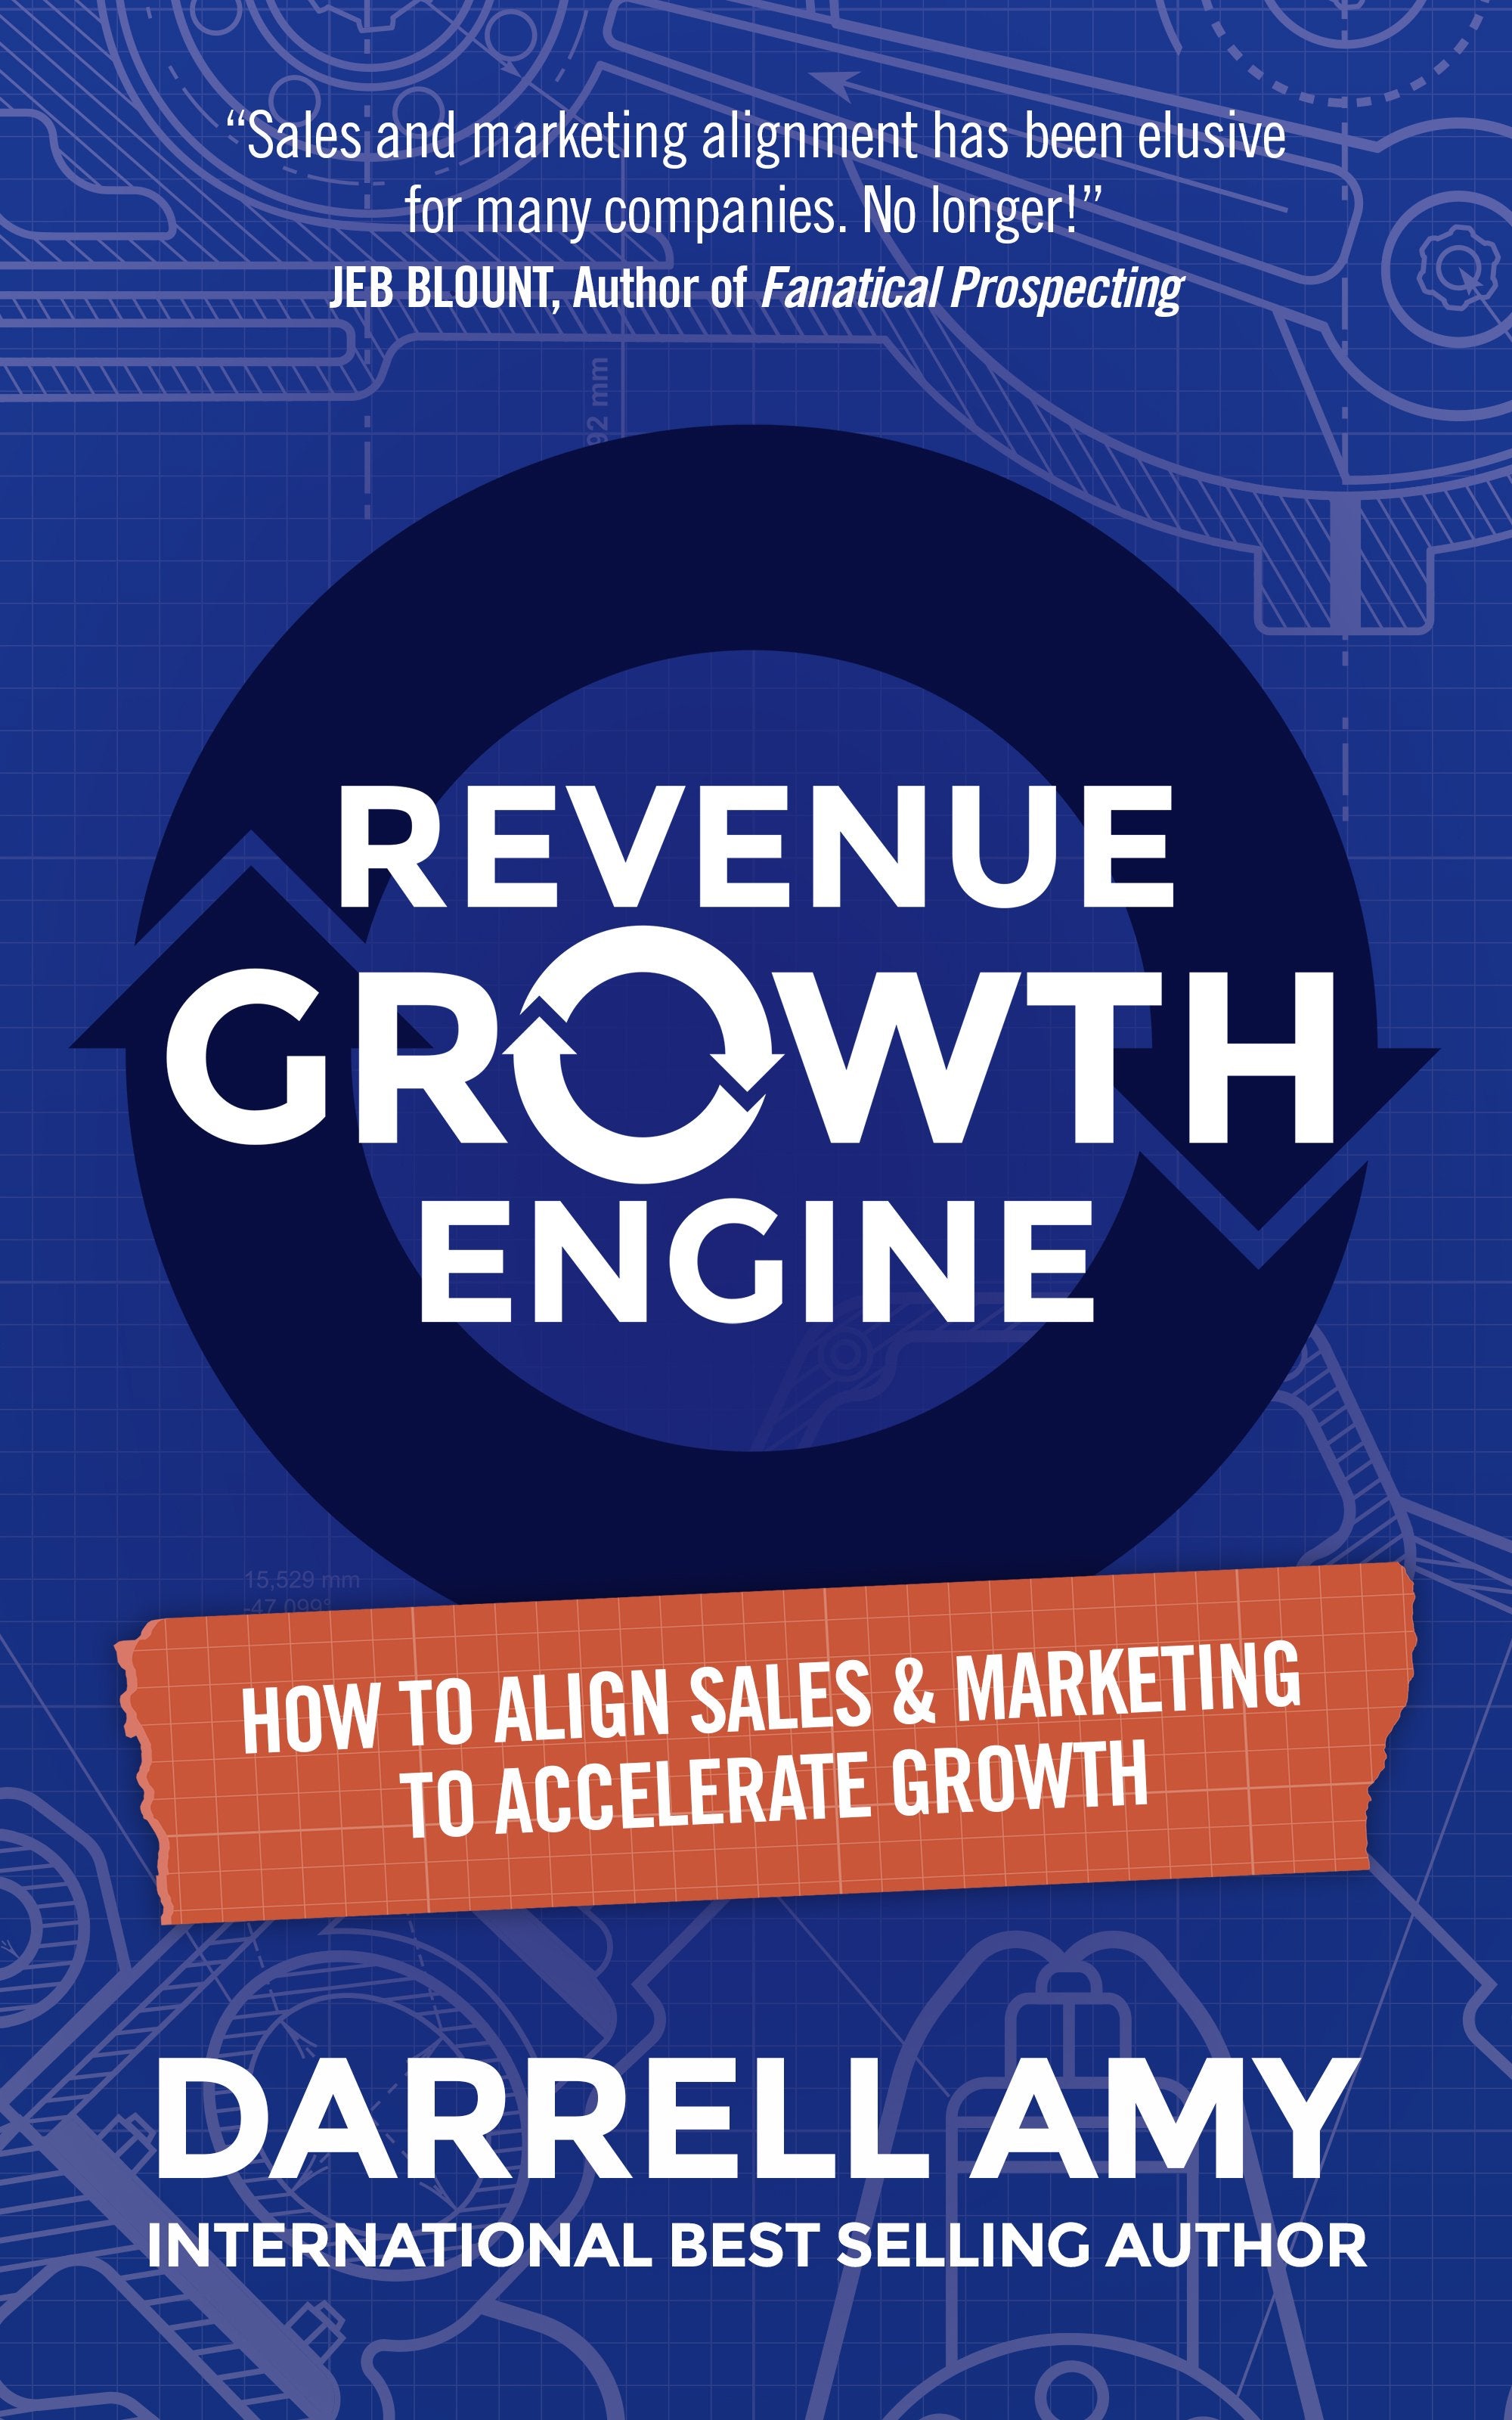 Book Review: Revenue Growth Engine